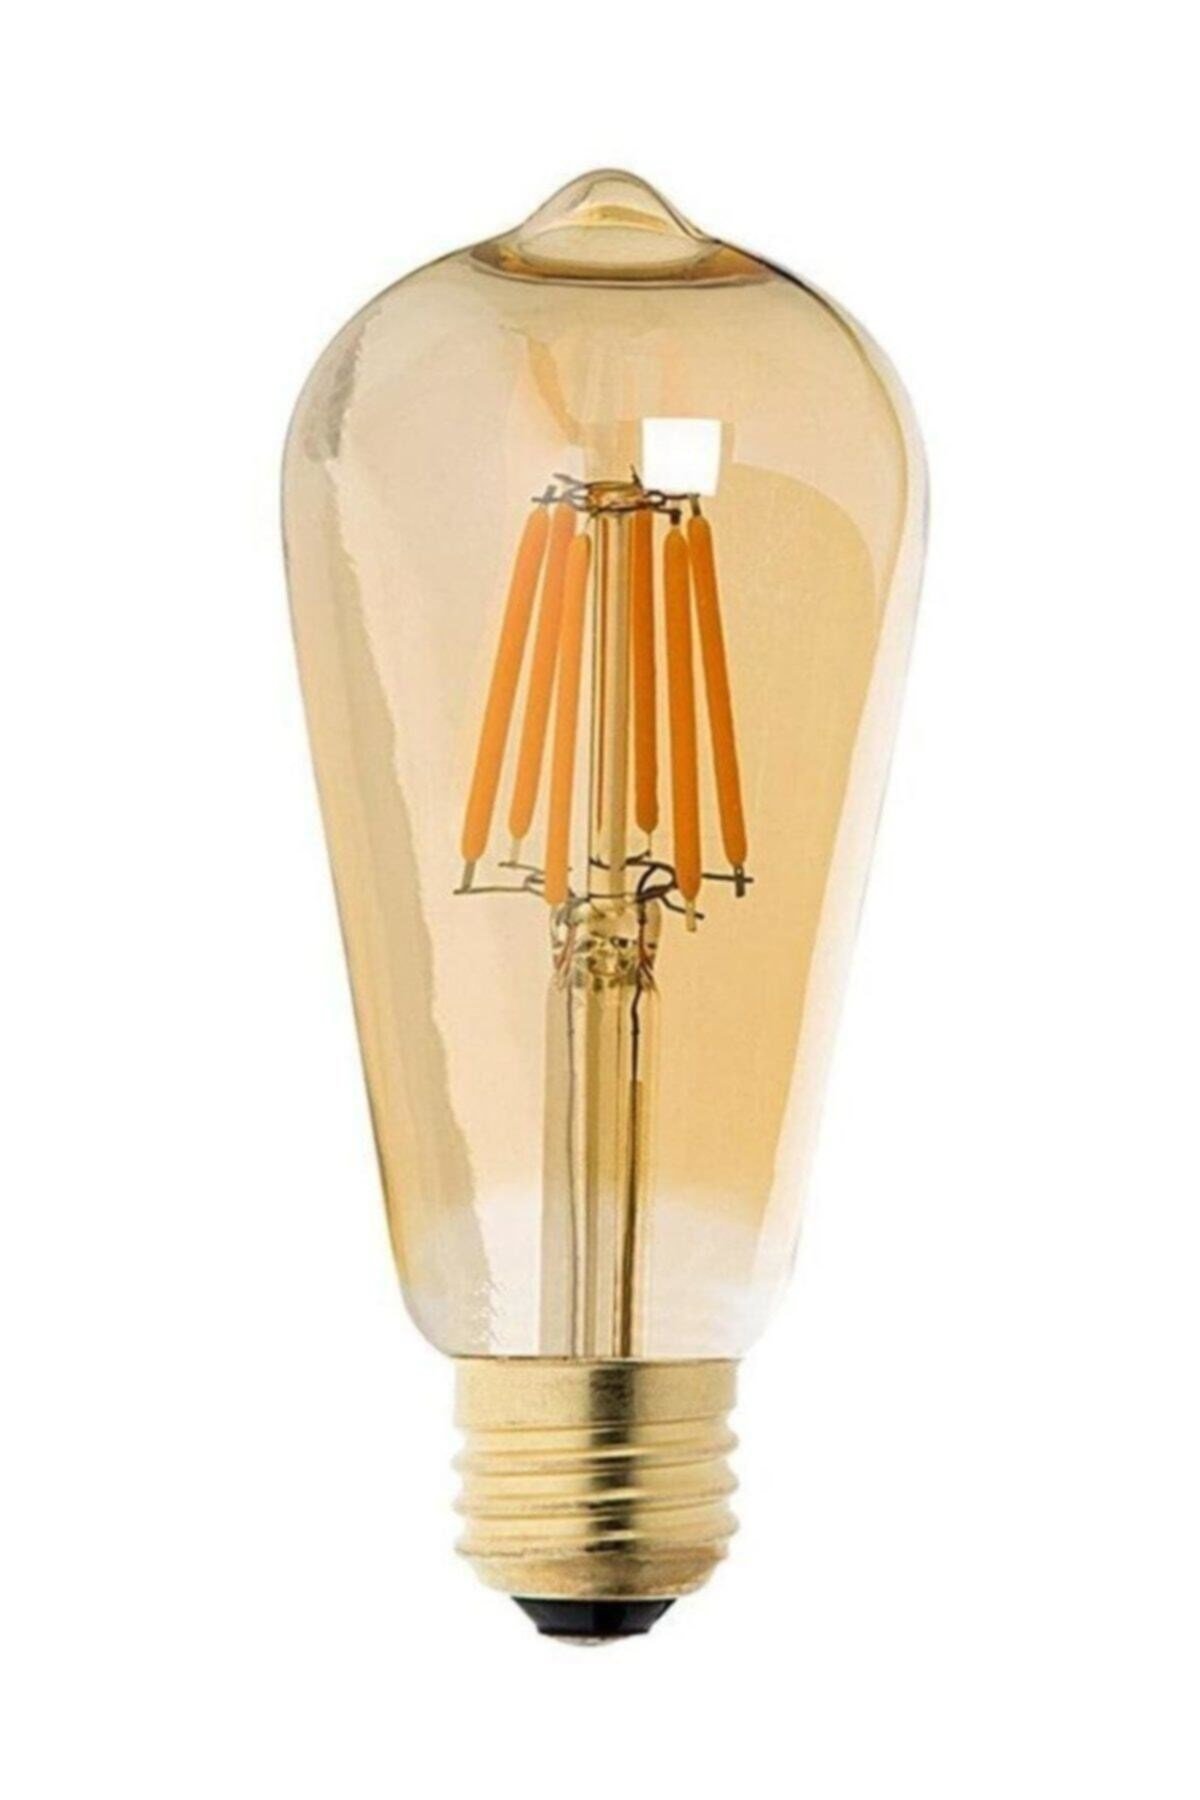 İTHAL 4W Rustik LED Ampul Amber 2500K ST64 Armut | elektrikdukani.com